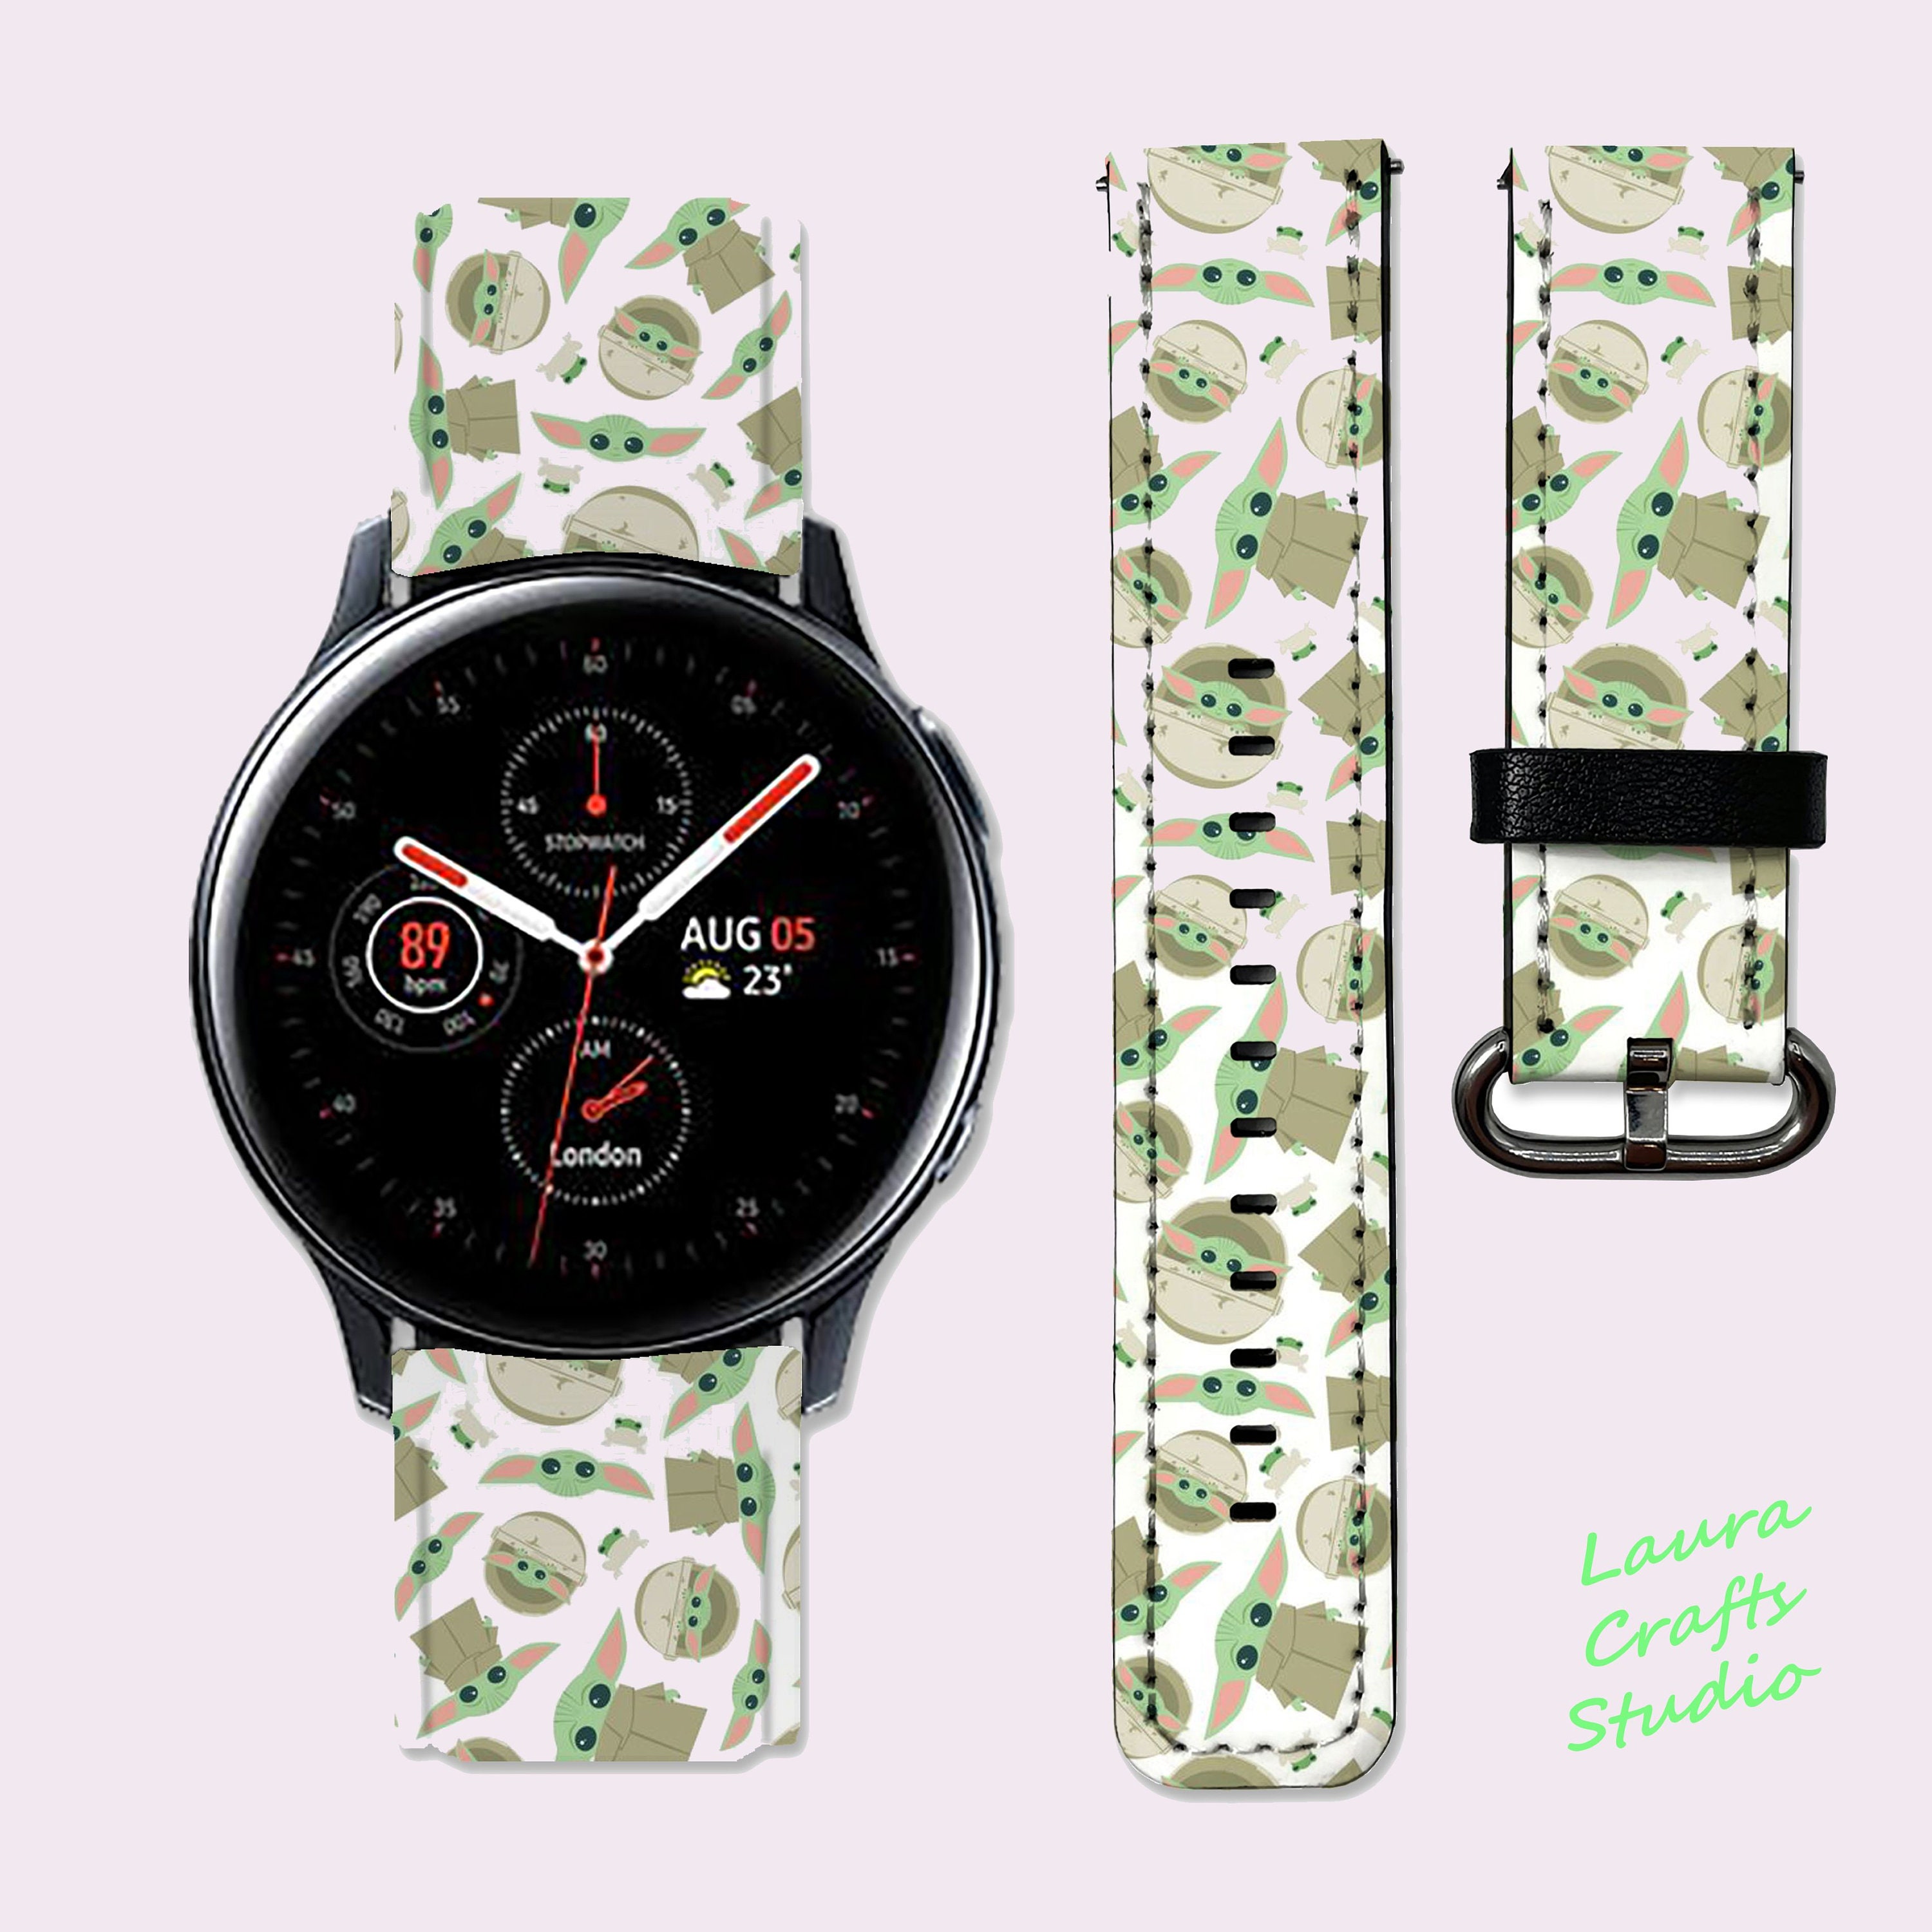 Samsung Galaxy Watch 6 5 / Gear S3 / Classic / Sport – Nylon Heavy Duty Watch  Strap Sport Watch Band - PRIMRIA Watch Bands & Straps